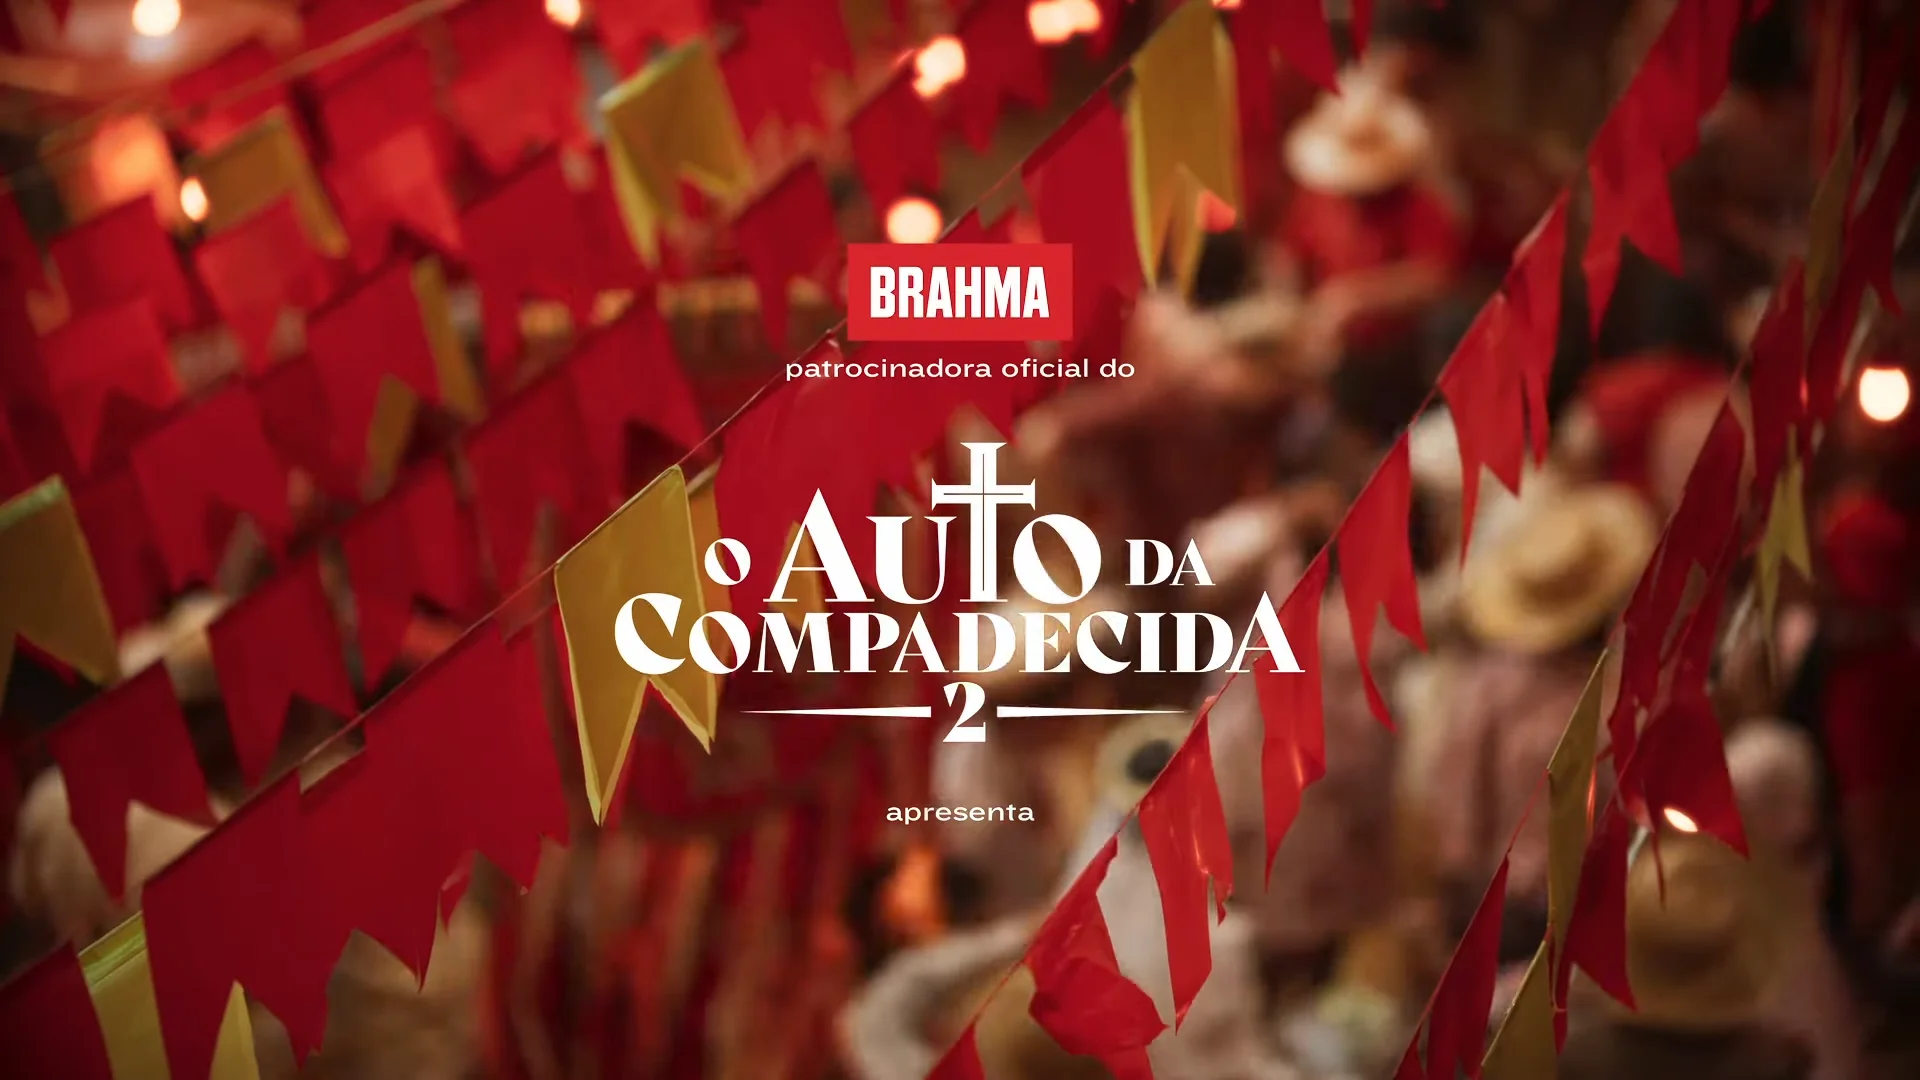 Brahma e Auto da Compadecida 2. Promotional image for "O Auto da Compadecida 2" with red and yellow flags, sponsored by Brahma.